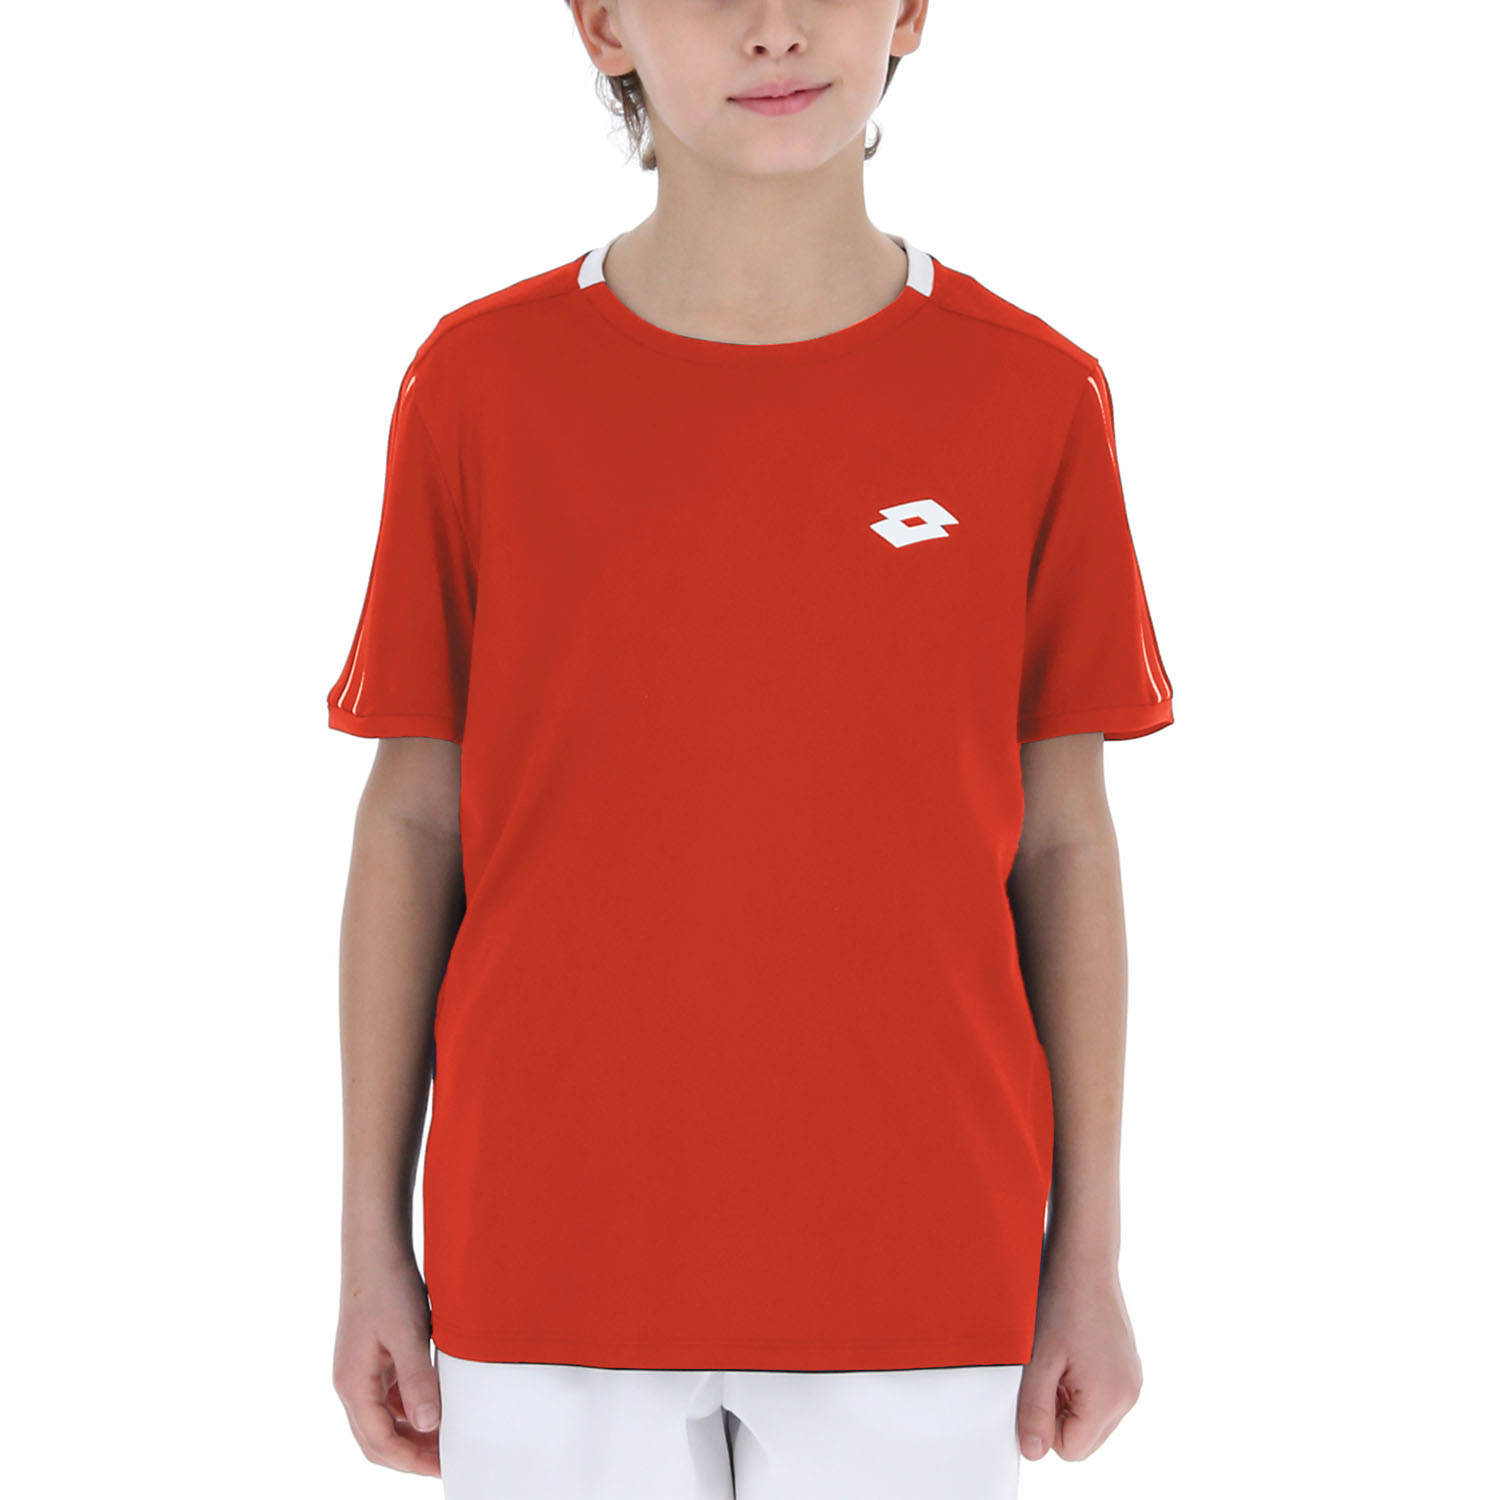 Lotto Squadra II T-Shirt Boys - Cliff Red